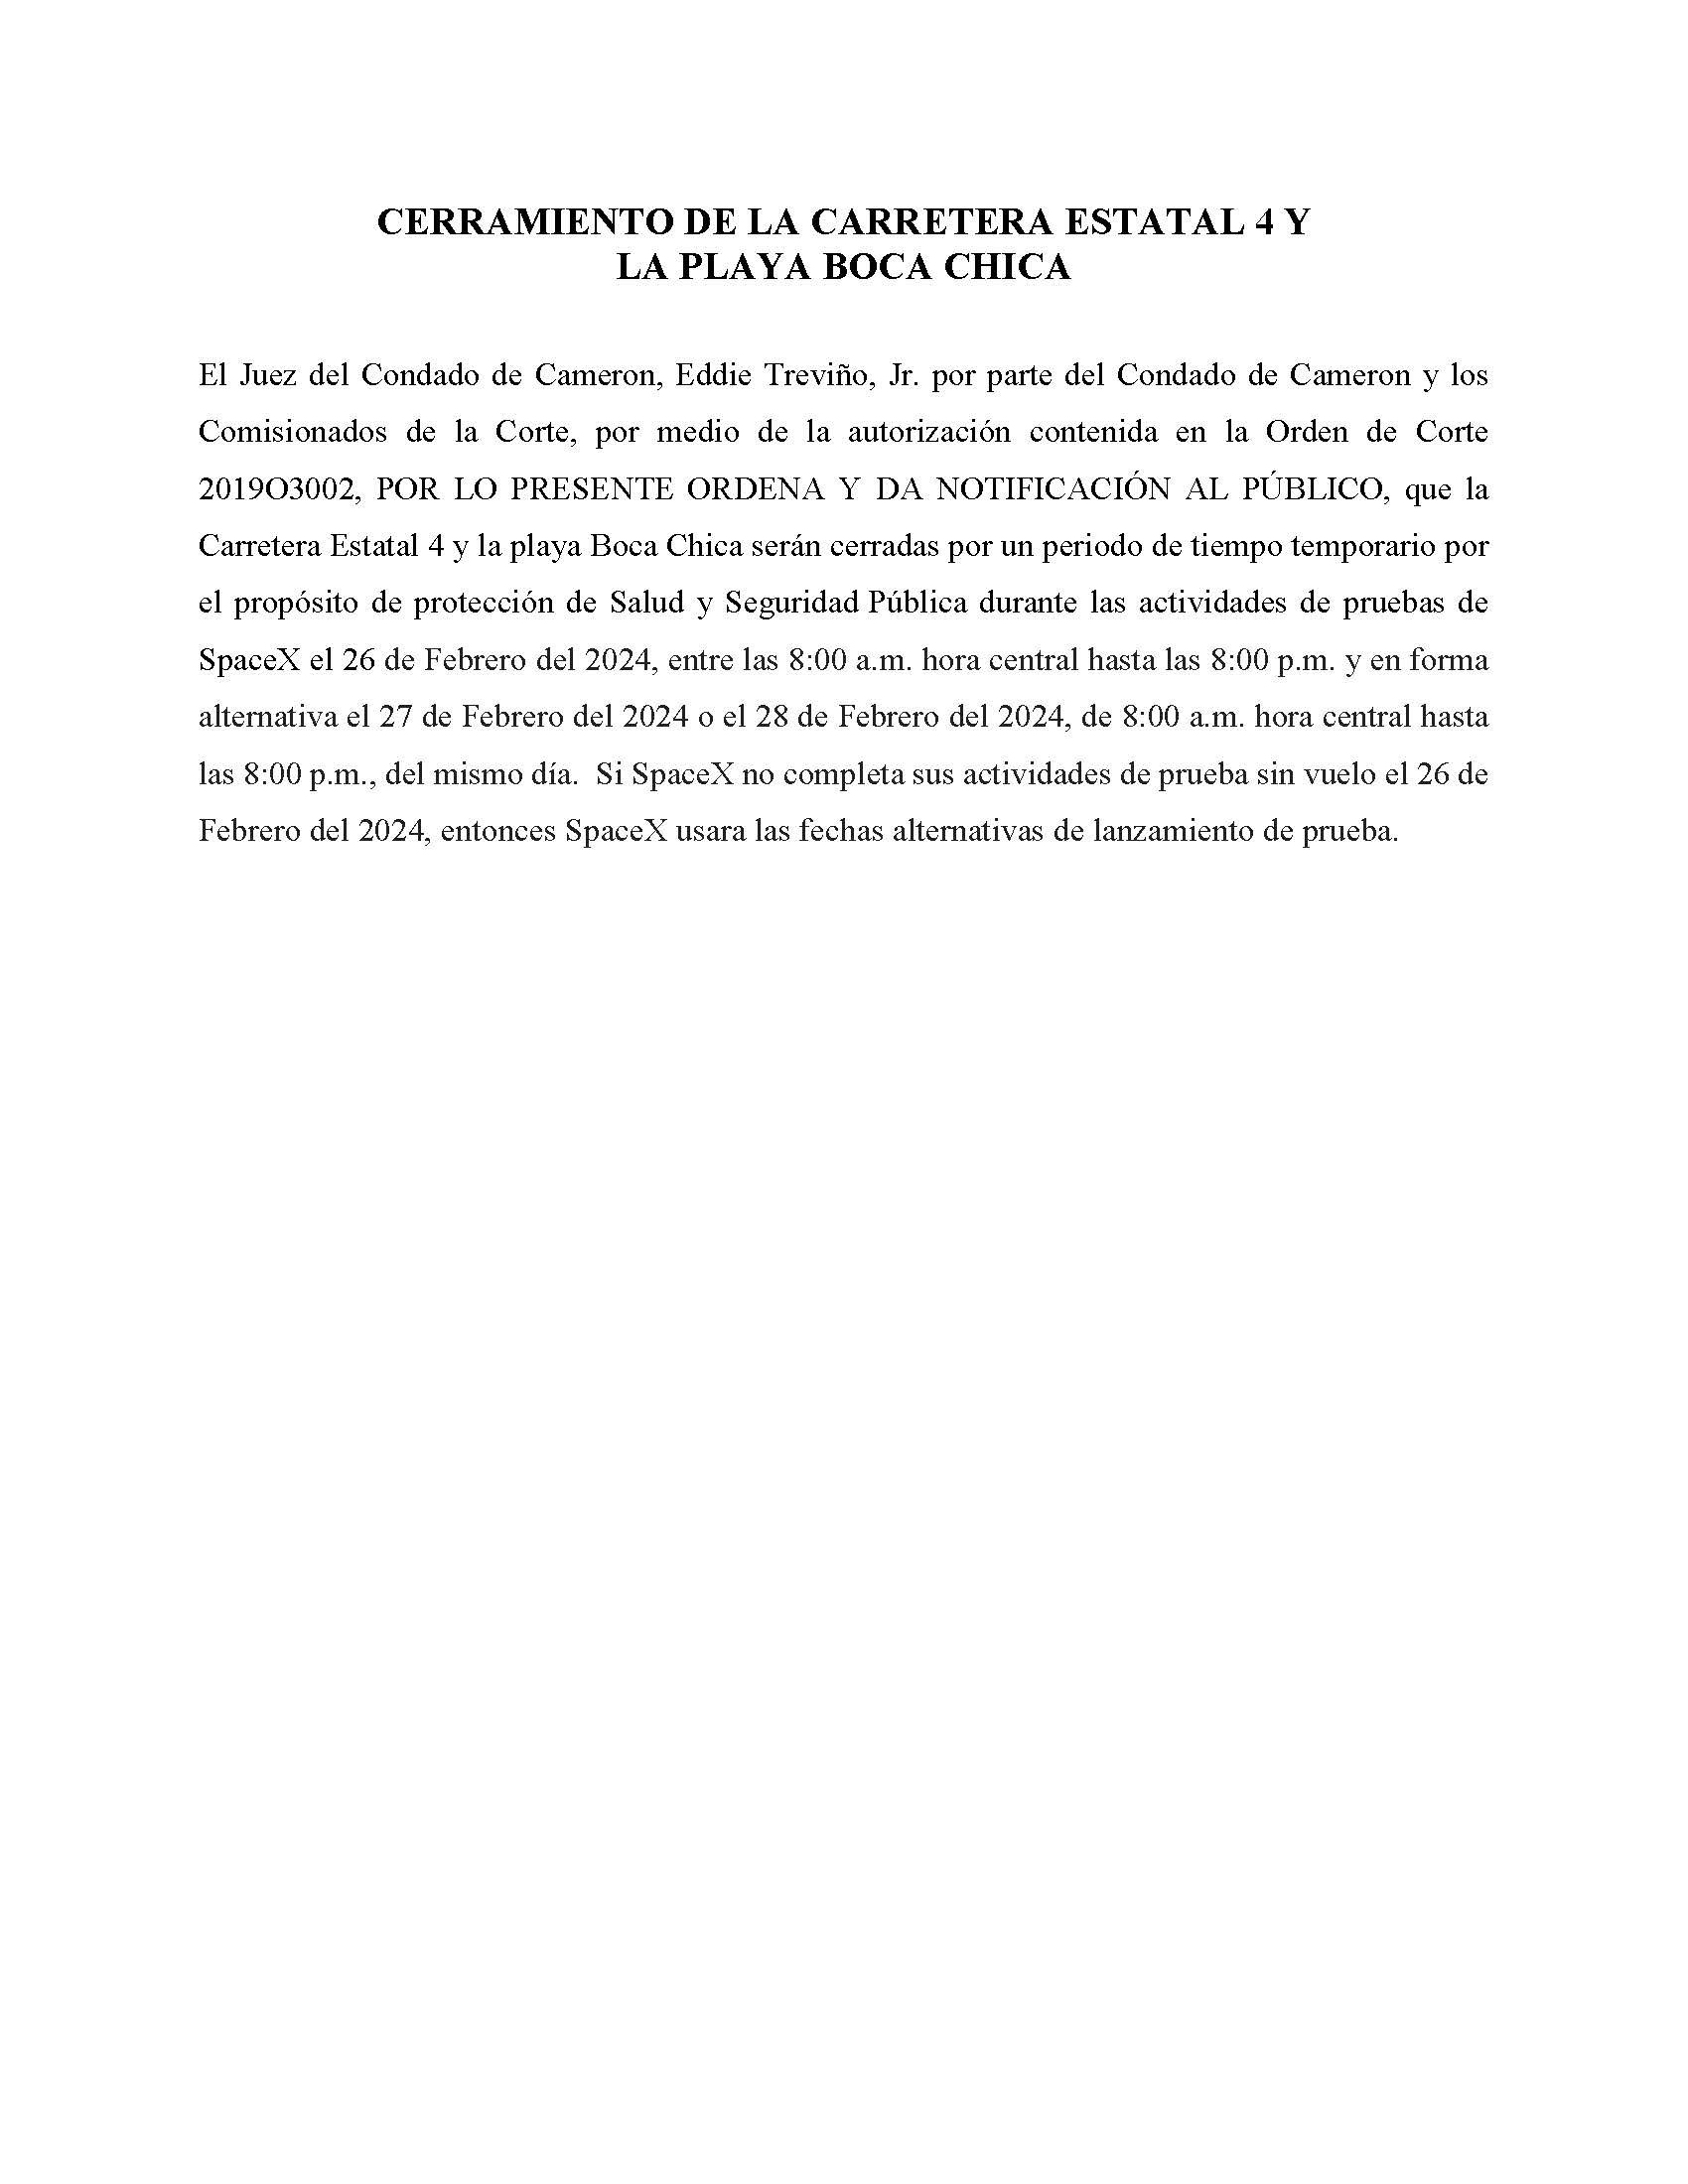 ORDER.CLOSURE OF HIGHWAY 4 Y LA PLAYA BOCA CHICA.SPANISH.02.26.24 002